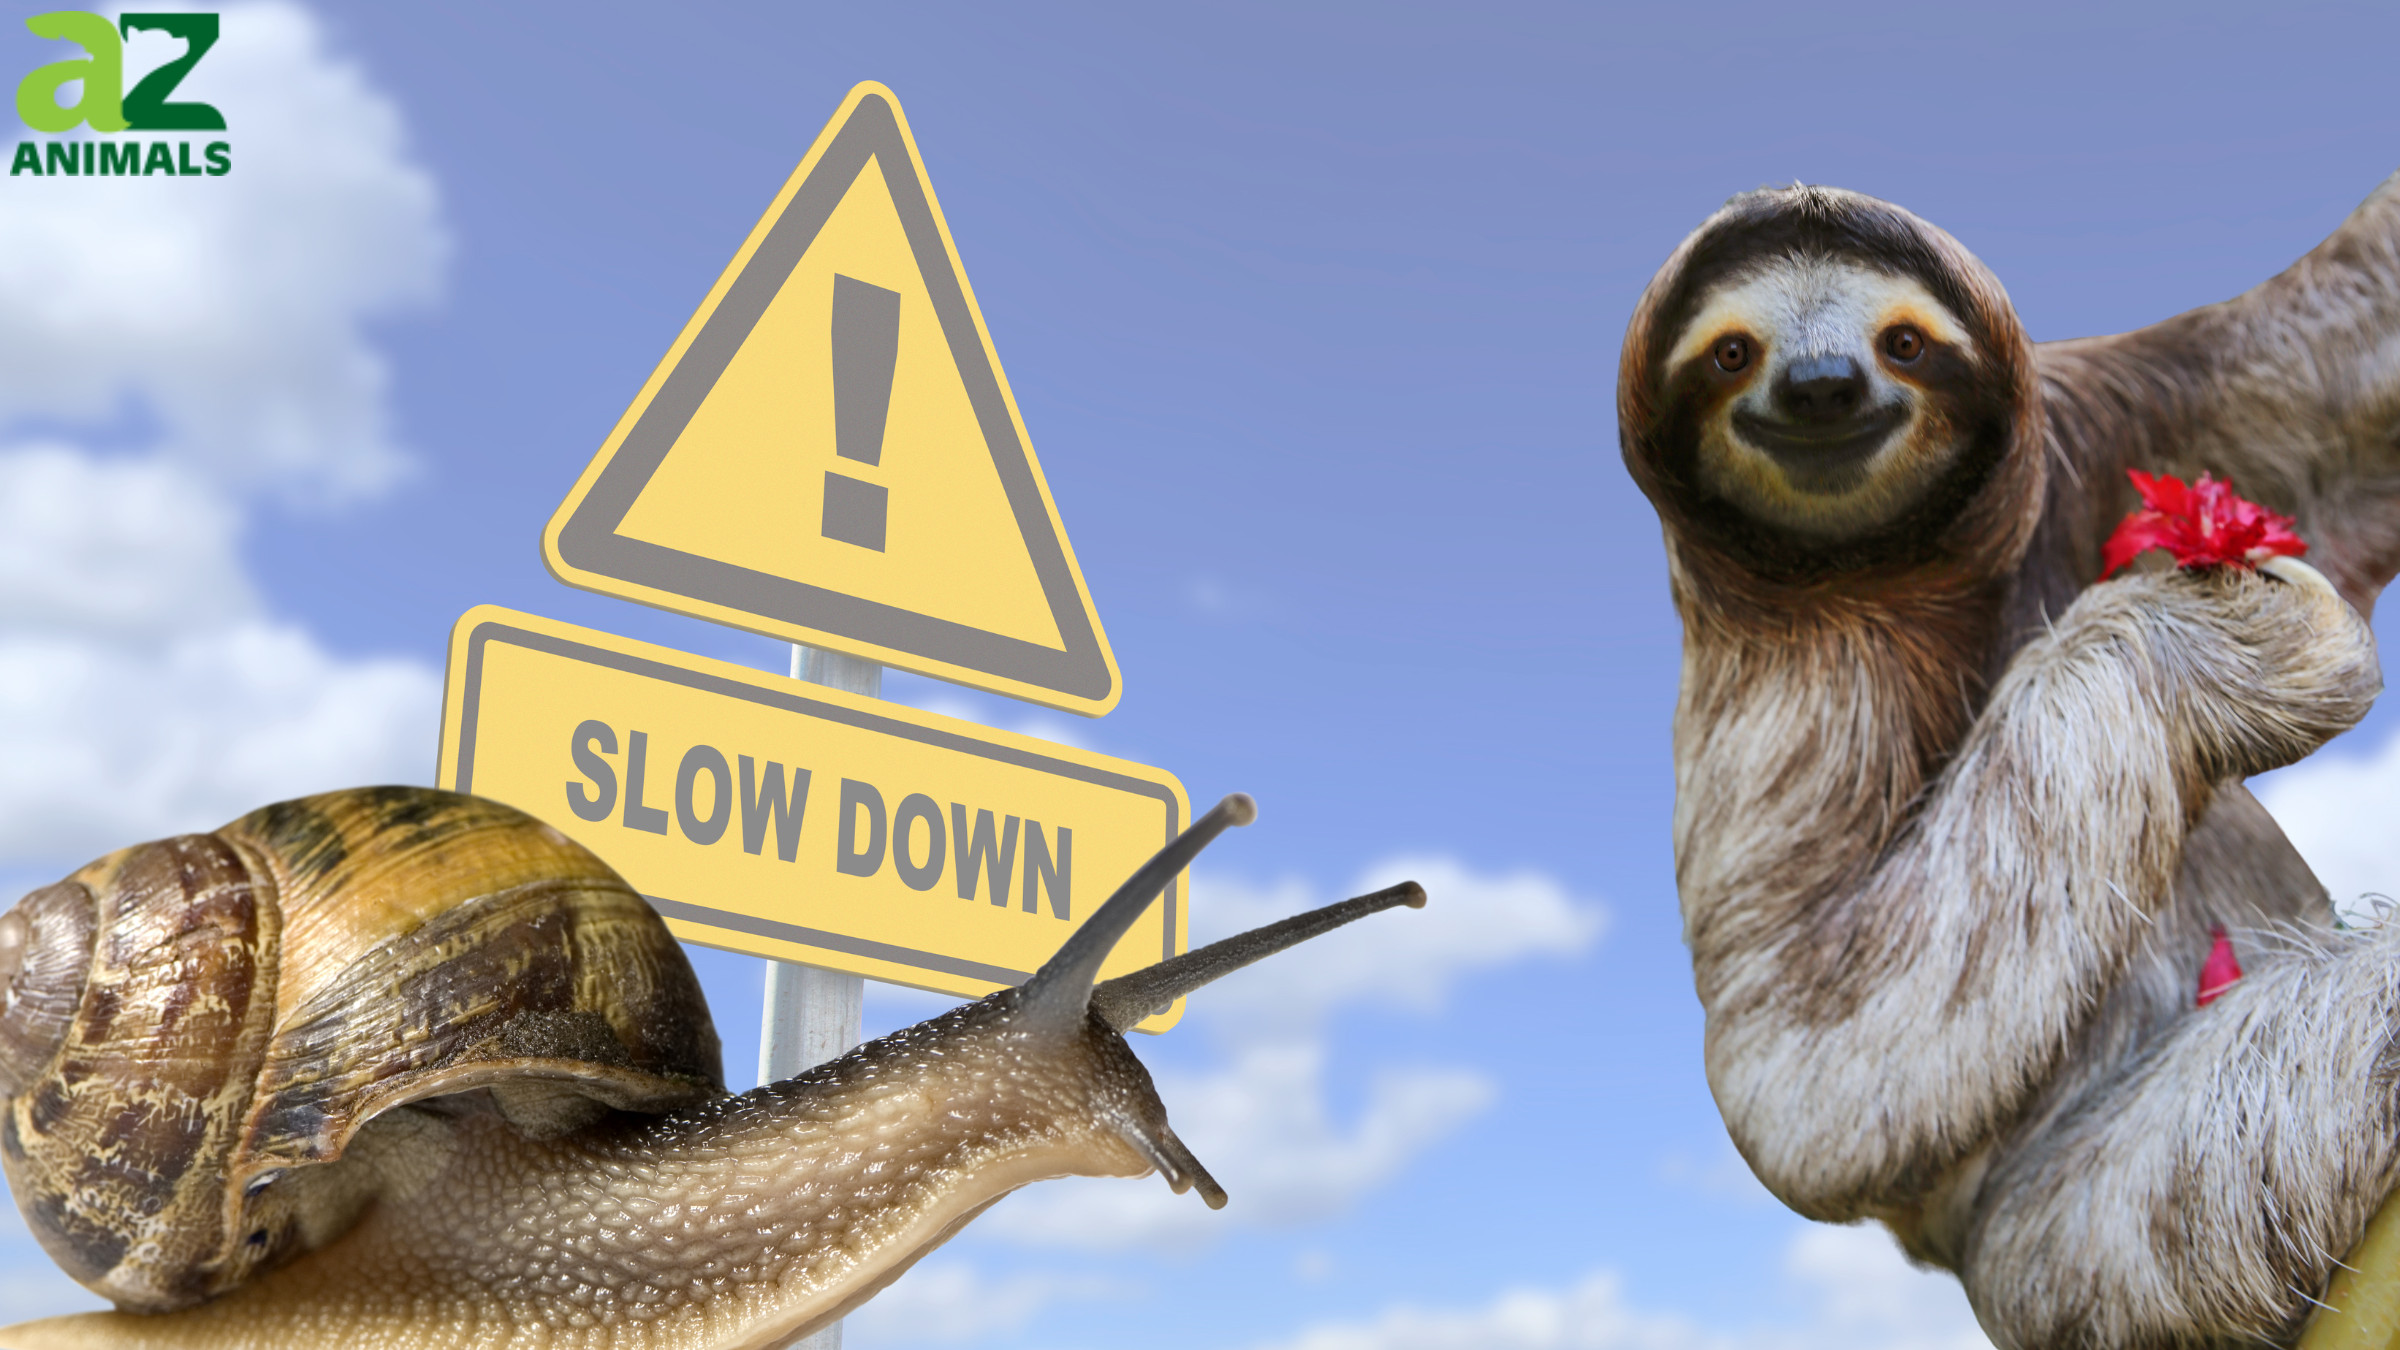 Slowest Animals